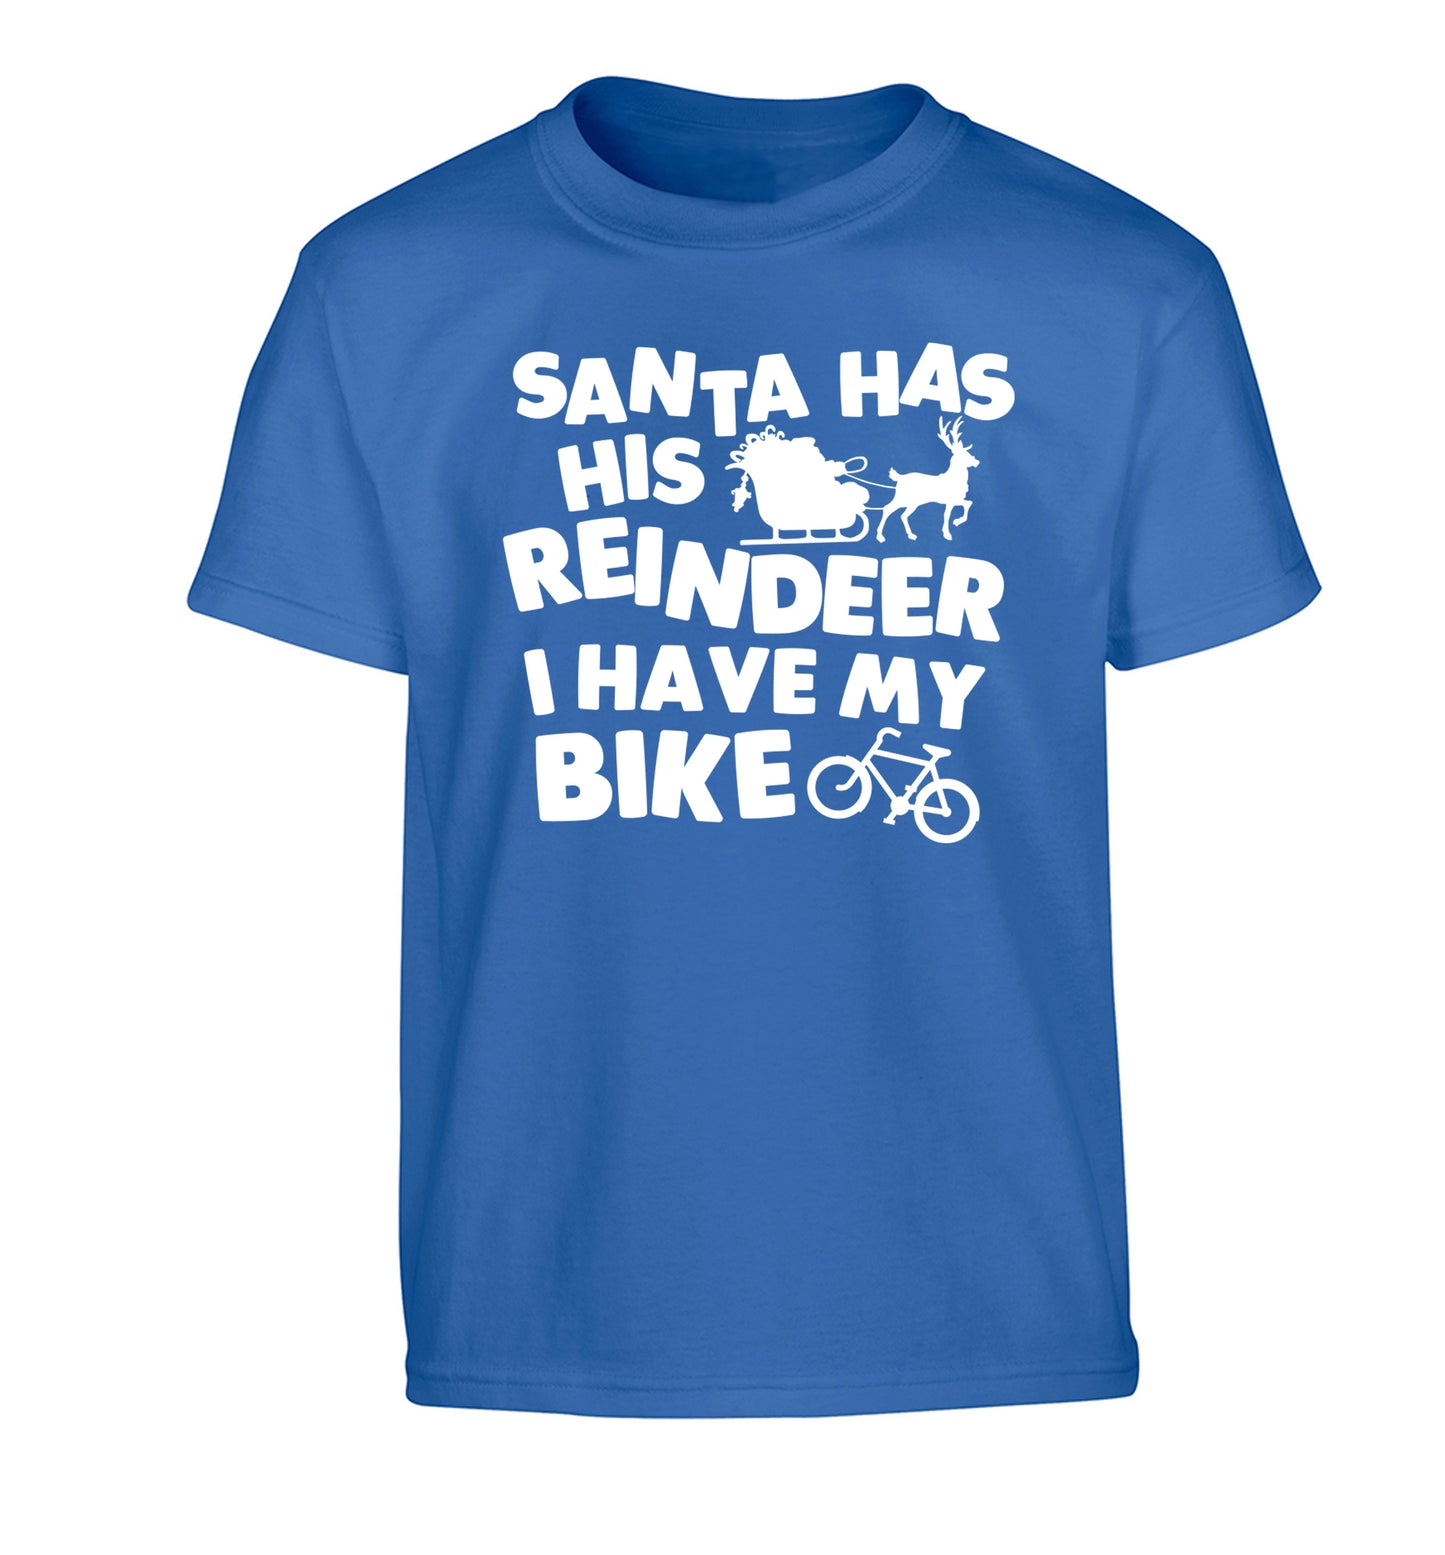 Santa has his reindeer I have my bike Children's blue Tshirt 12-14 Years